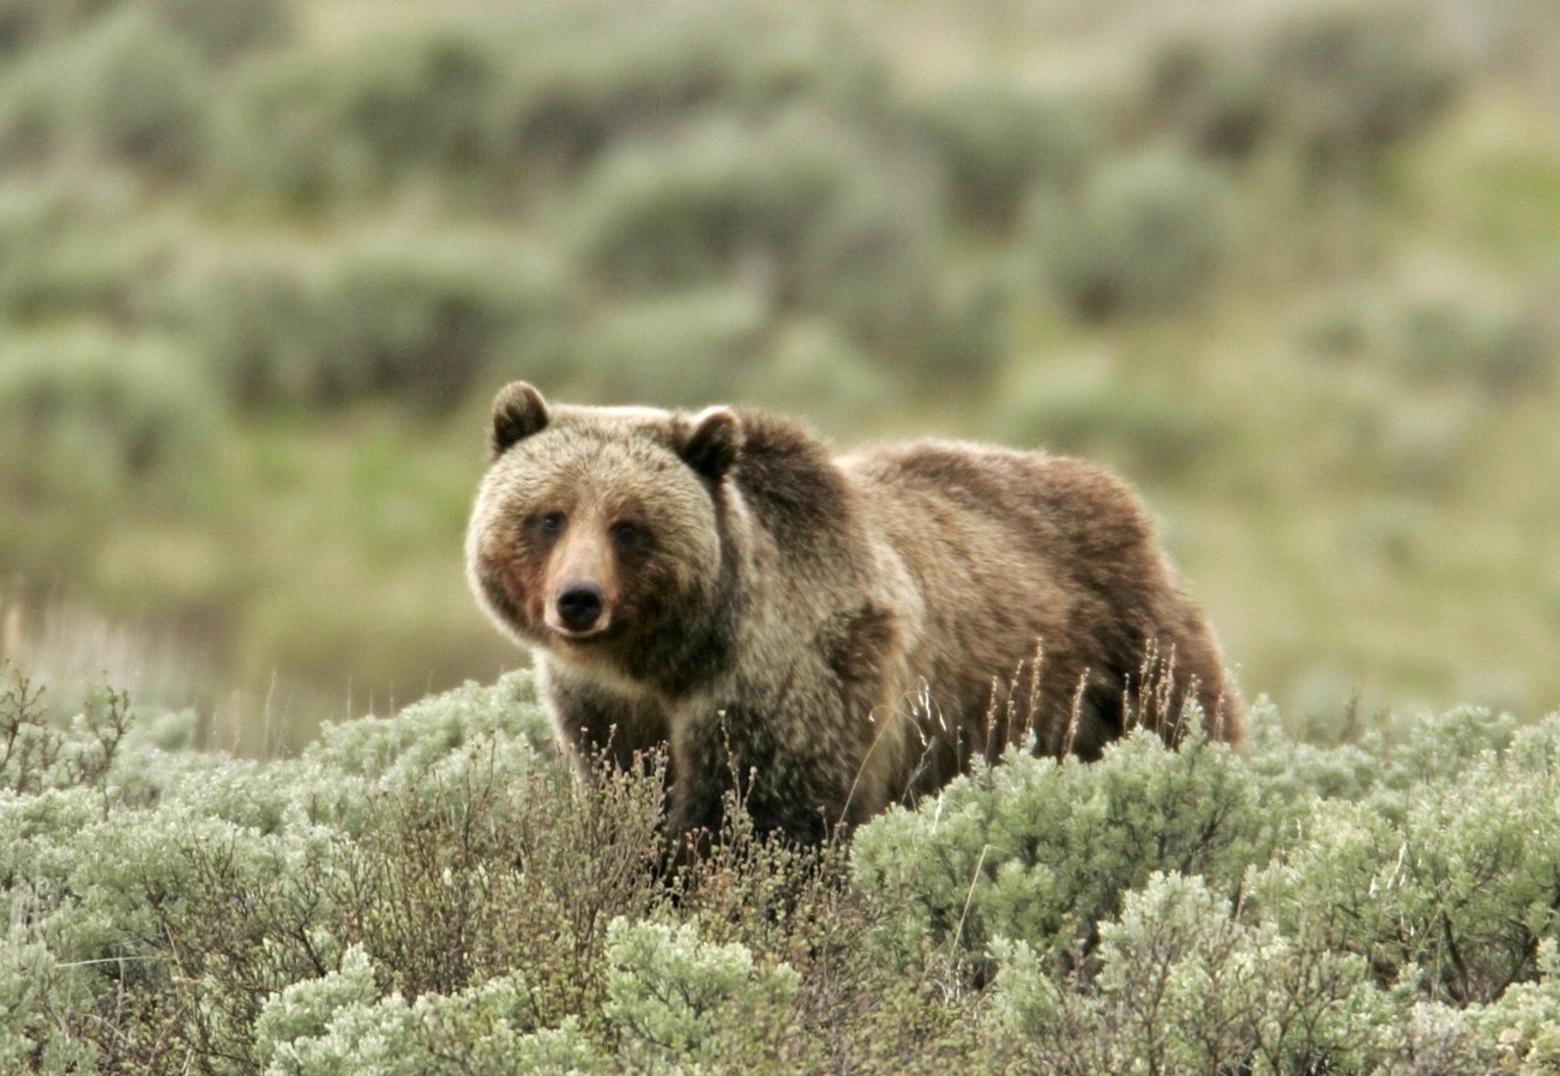 Grizzly bear. Photo courtesy Jim Peaco/NPS